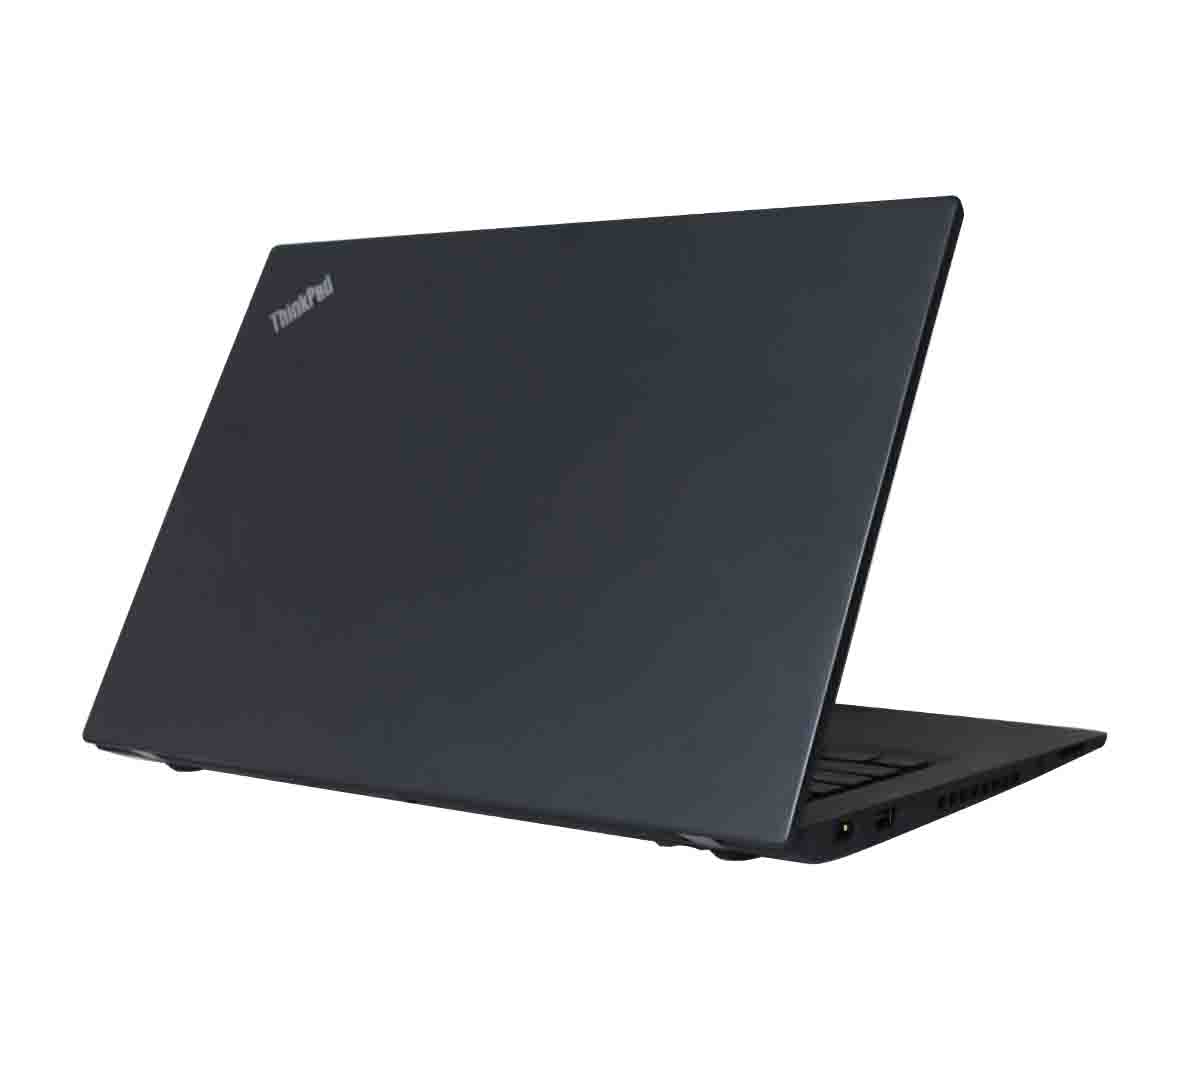 Lenovo ThinkPad T480s Business Laptop, Intel Core i7-8th Generation CPU, 16GB RAM, 512GB SSD, 14 inch Display, Windows 10 Pro